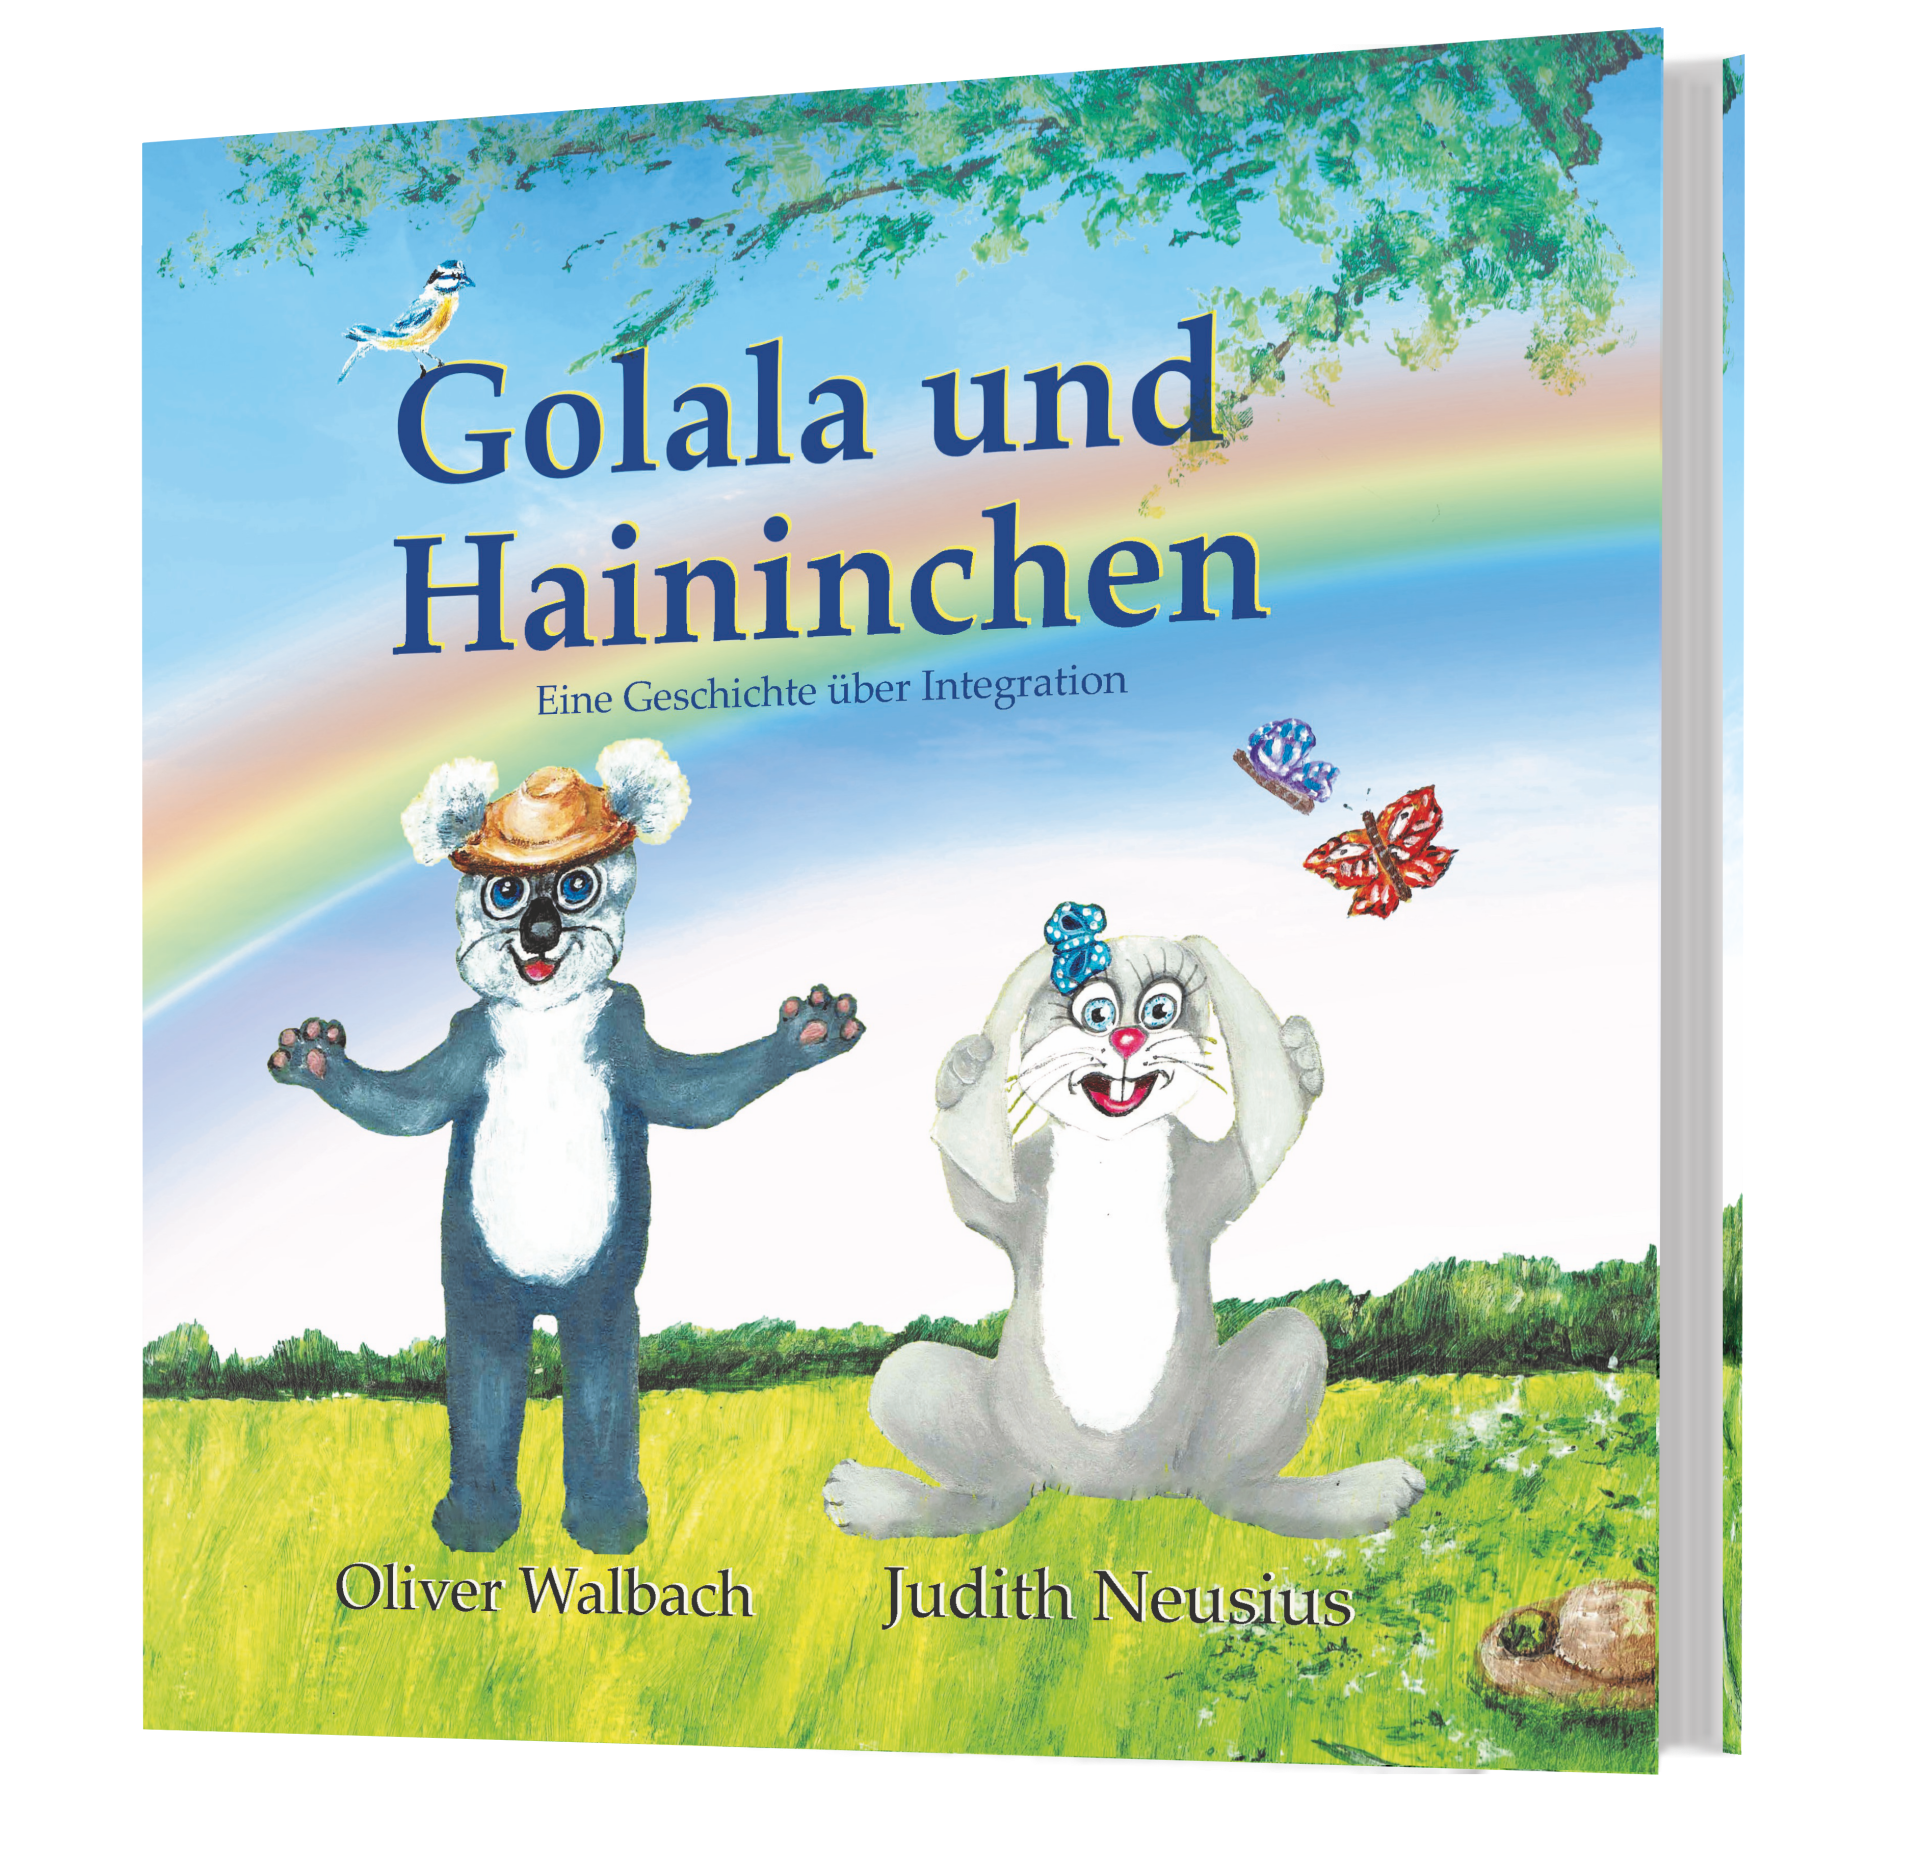 Golala Haininchen Kaninchen Hase Bär Integration Freunde olala Kinderbuch Bilderbuch Schmetterling Regenbogen